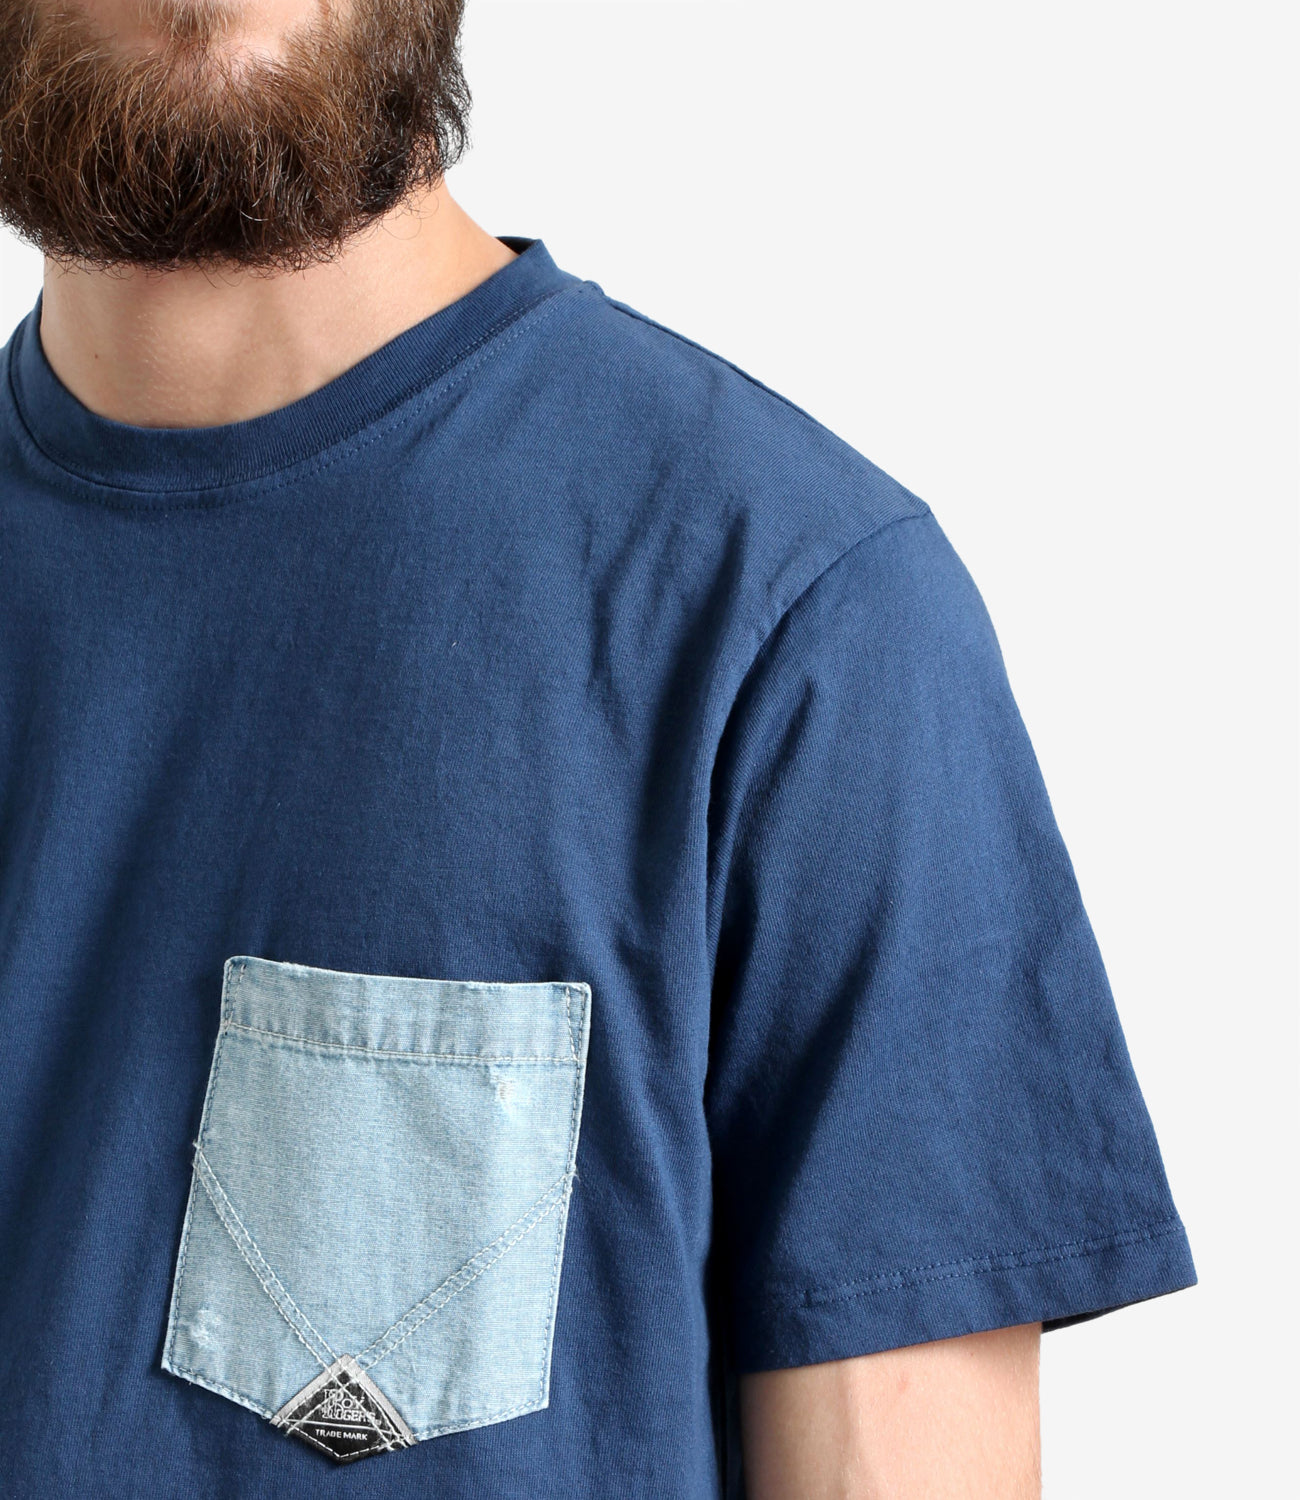 Roy Roger's | Navy Blue Pocket T-Shirt